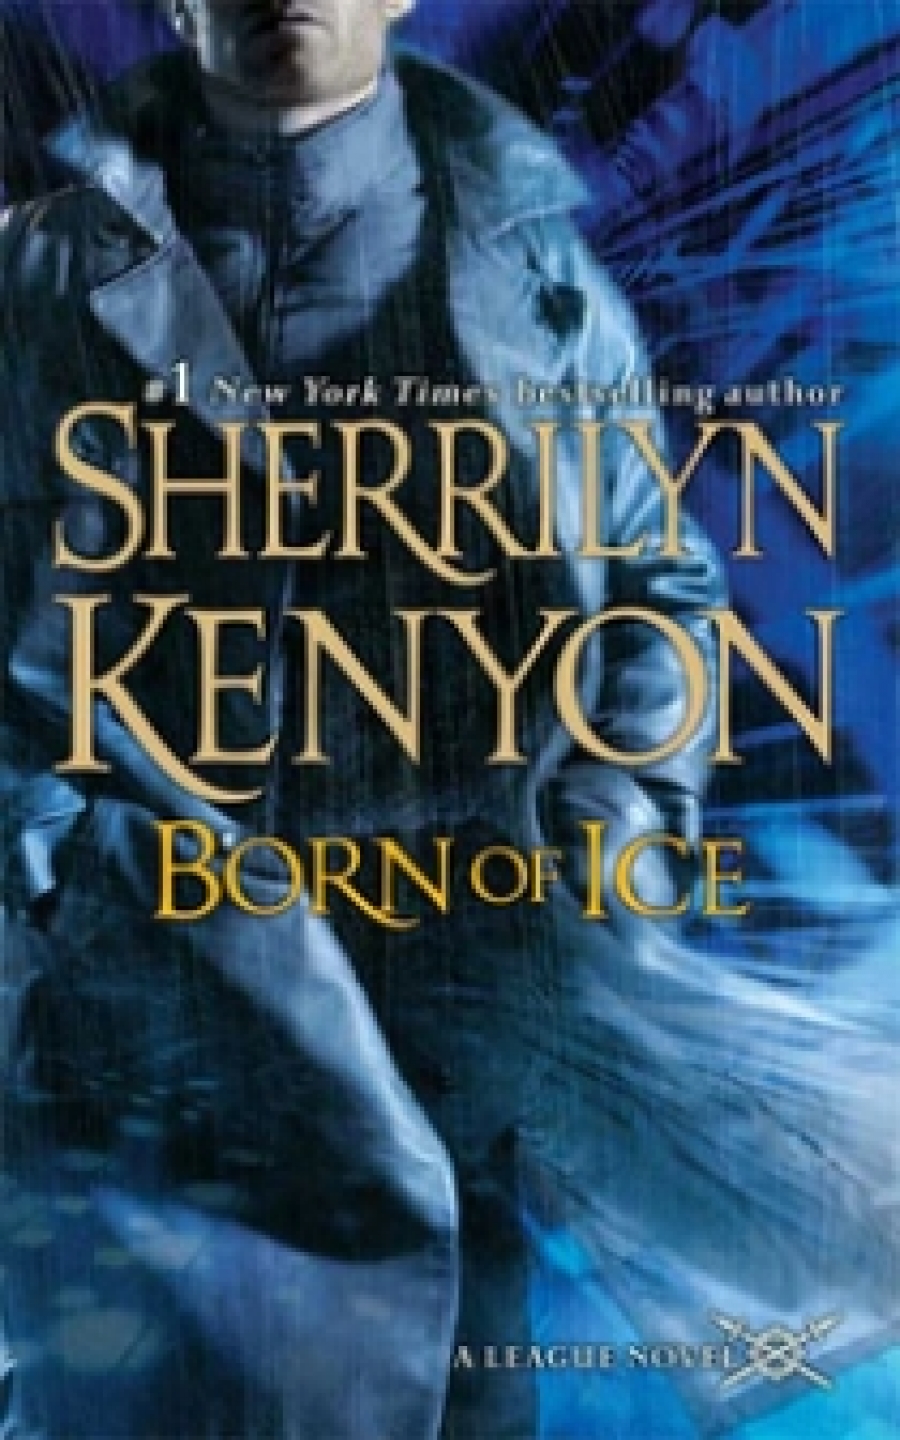 Kenyon S. Born of Ice (A League Novel) 